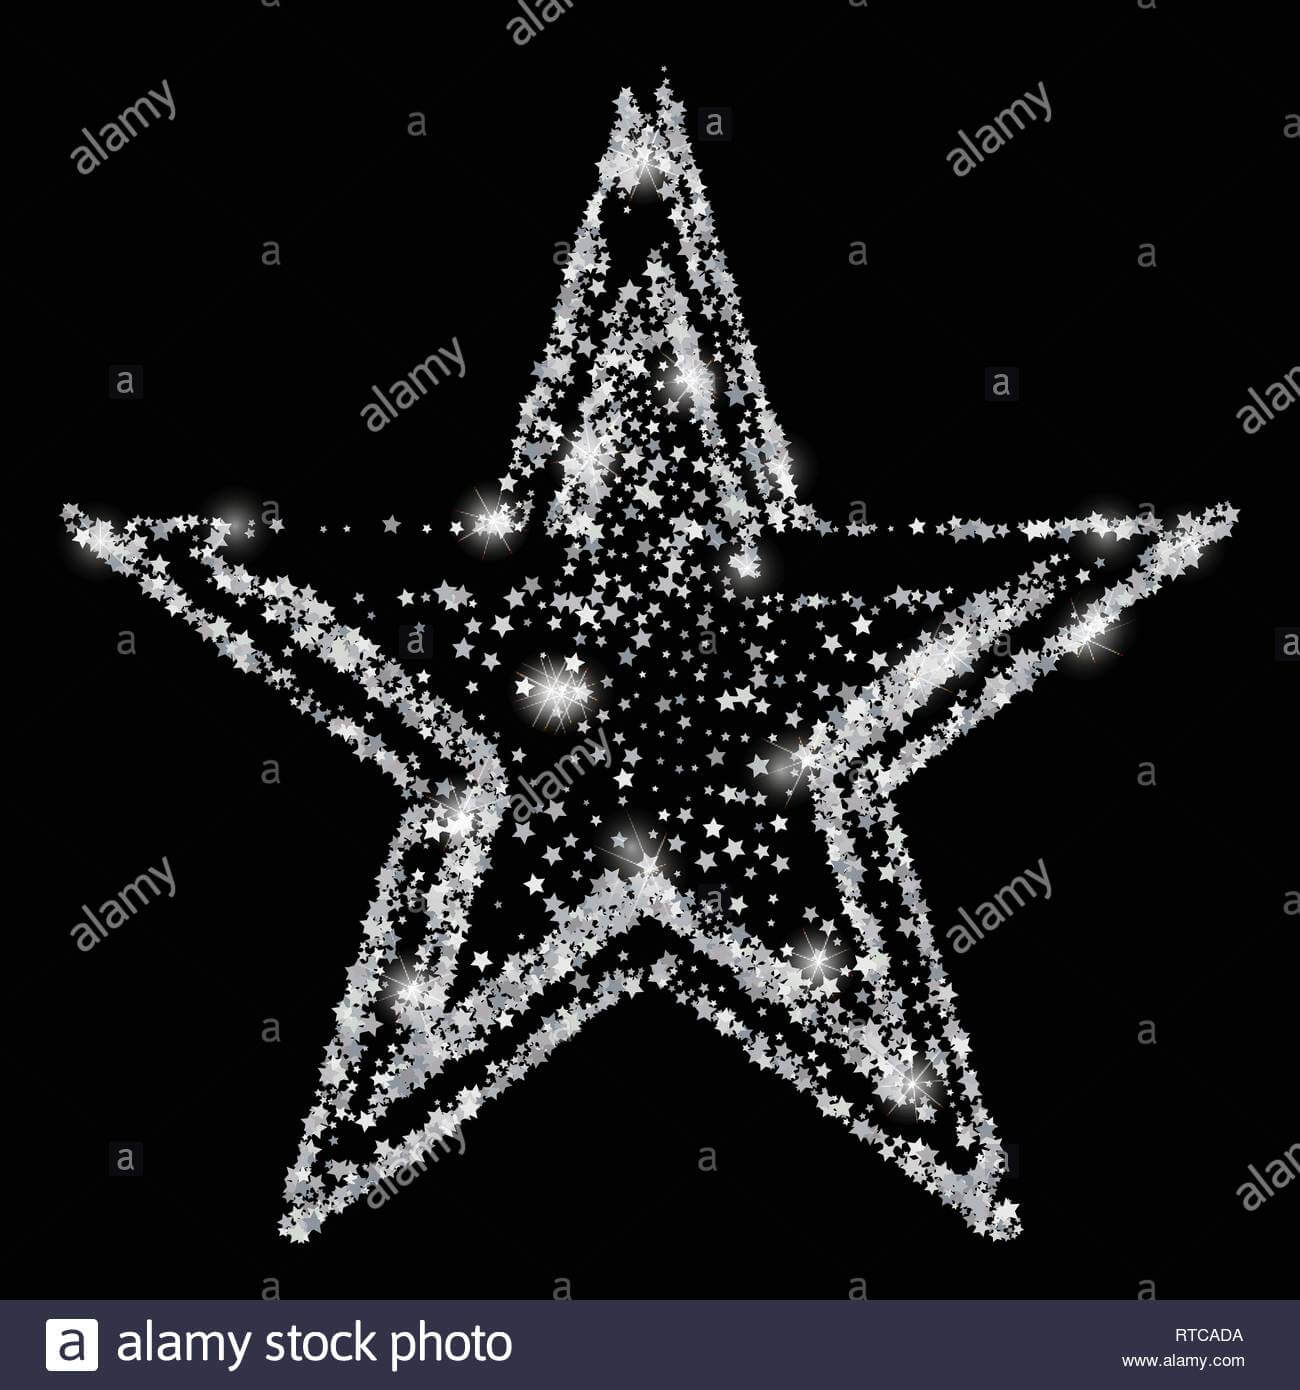 Silver Glitter Star Of Many Small Stars. Silver Confetti With Small Certificate Template